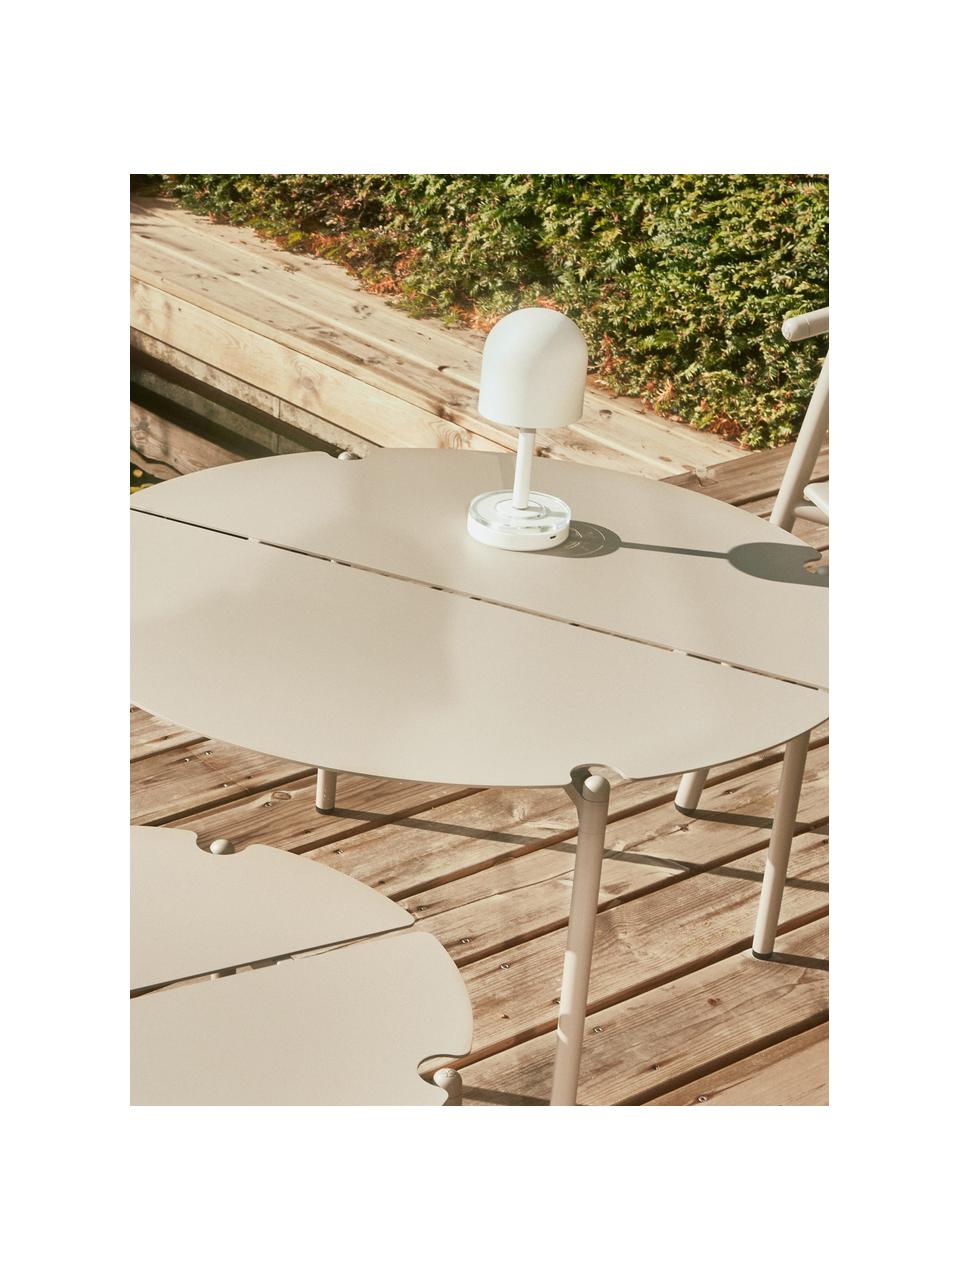 Kleine mobiele LED outdoor tafellamp Luceo, Lampvoet: glas, gecoat metaal, Mat wit, Ø 9 x H 22 cm